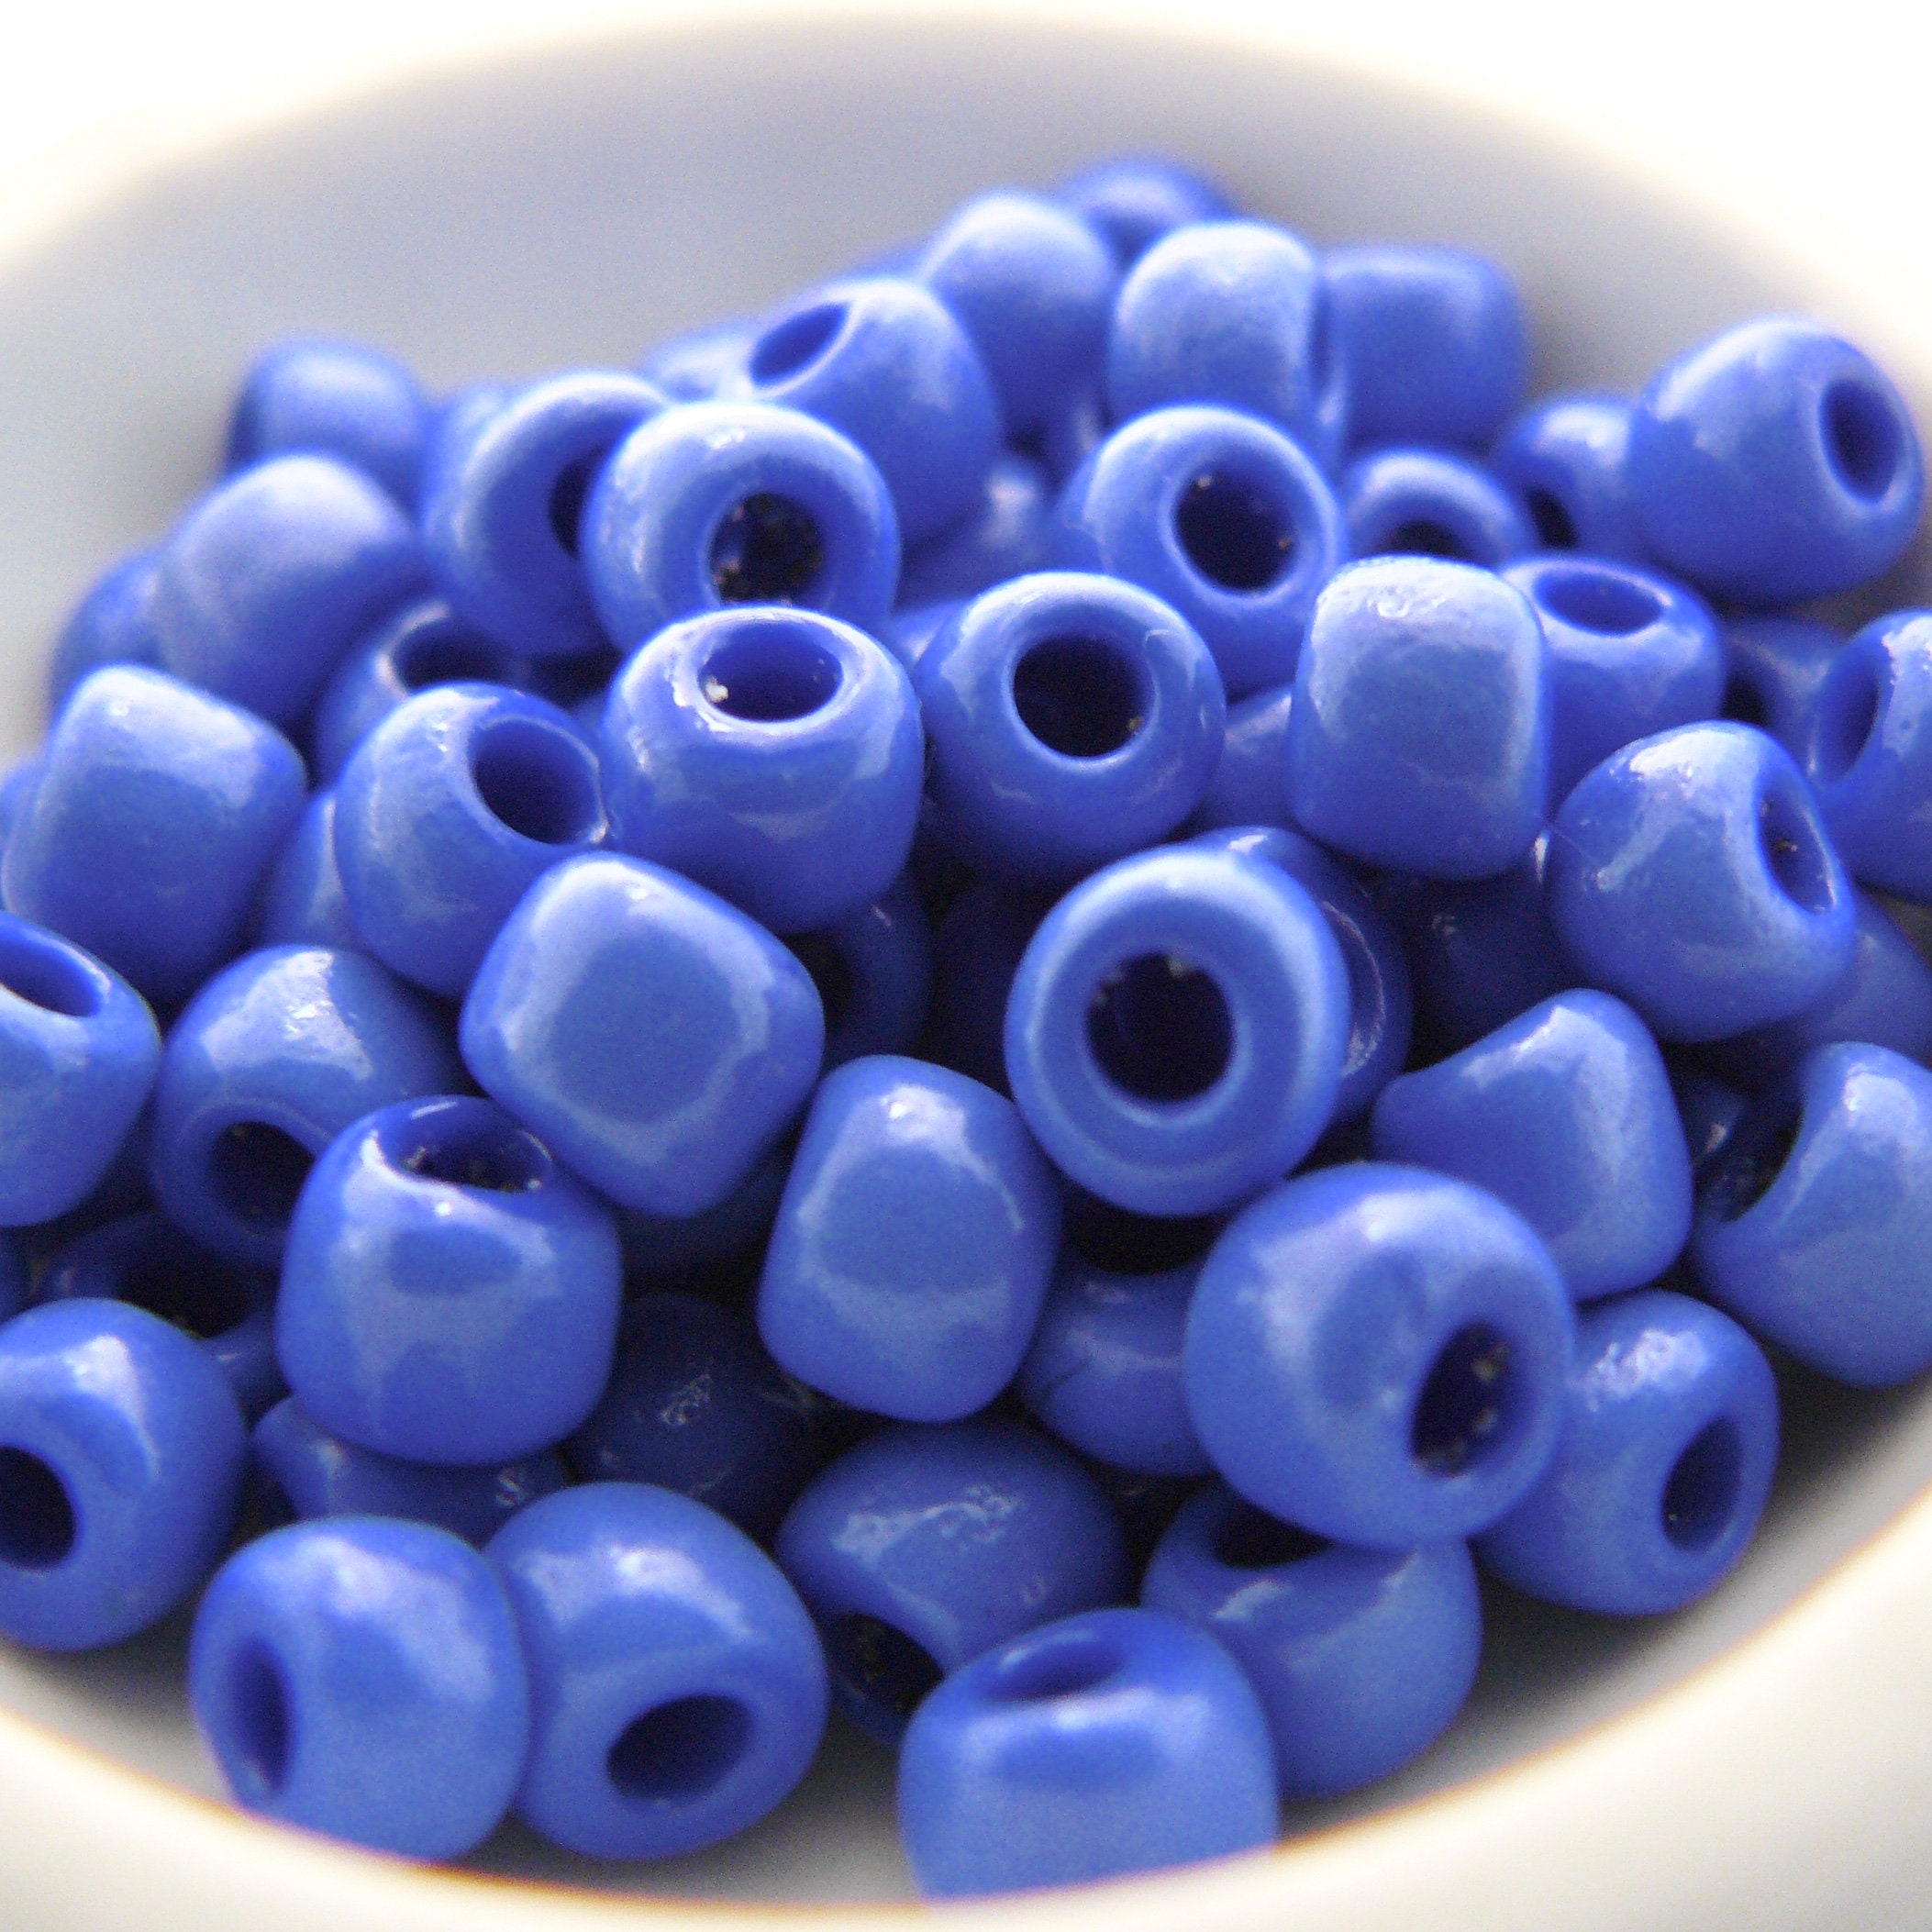 Dark Cornflower Blue - Size 8 Pony Beads